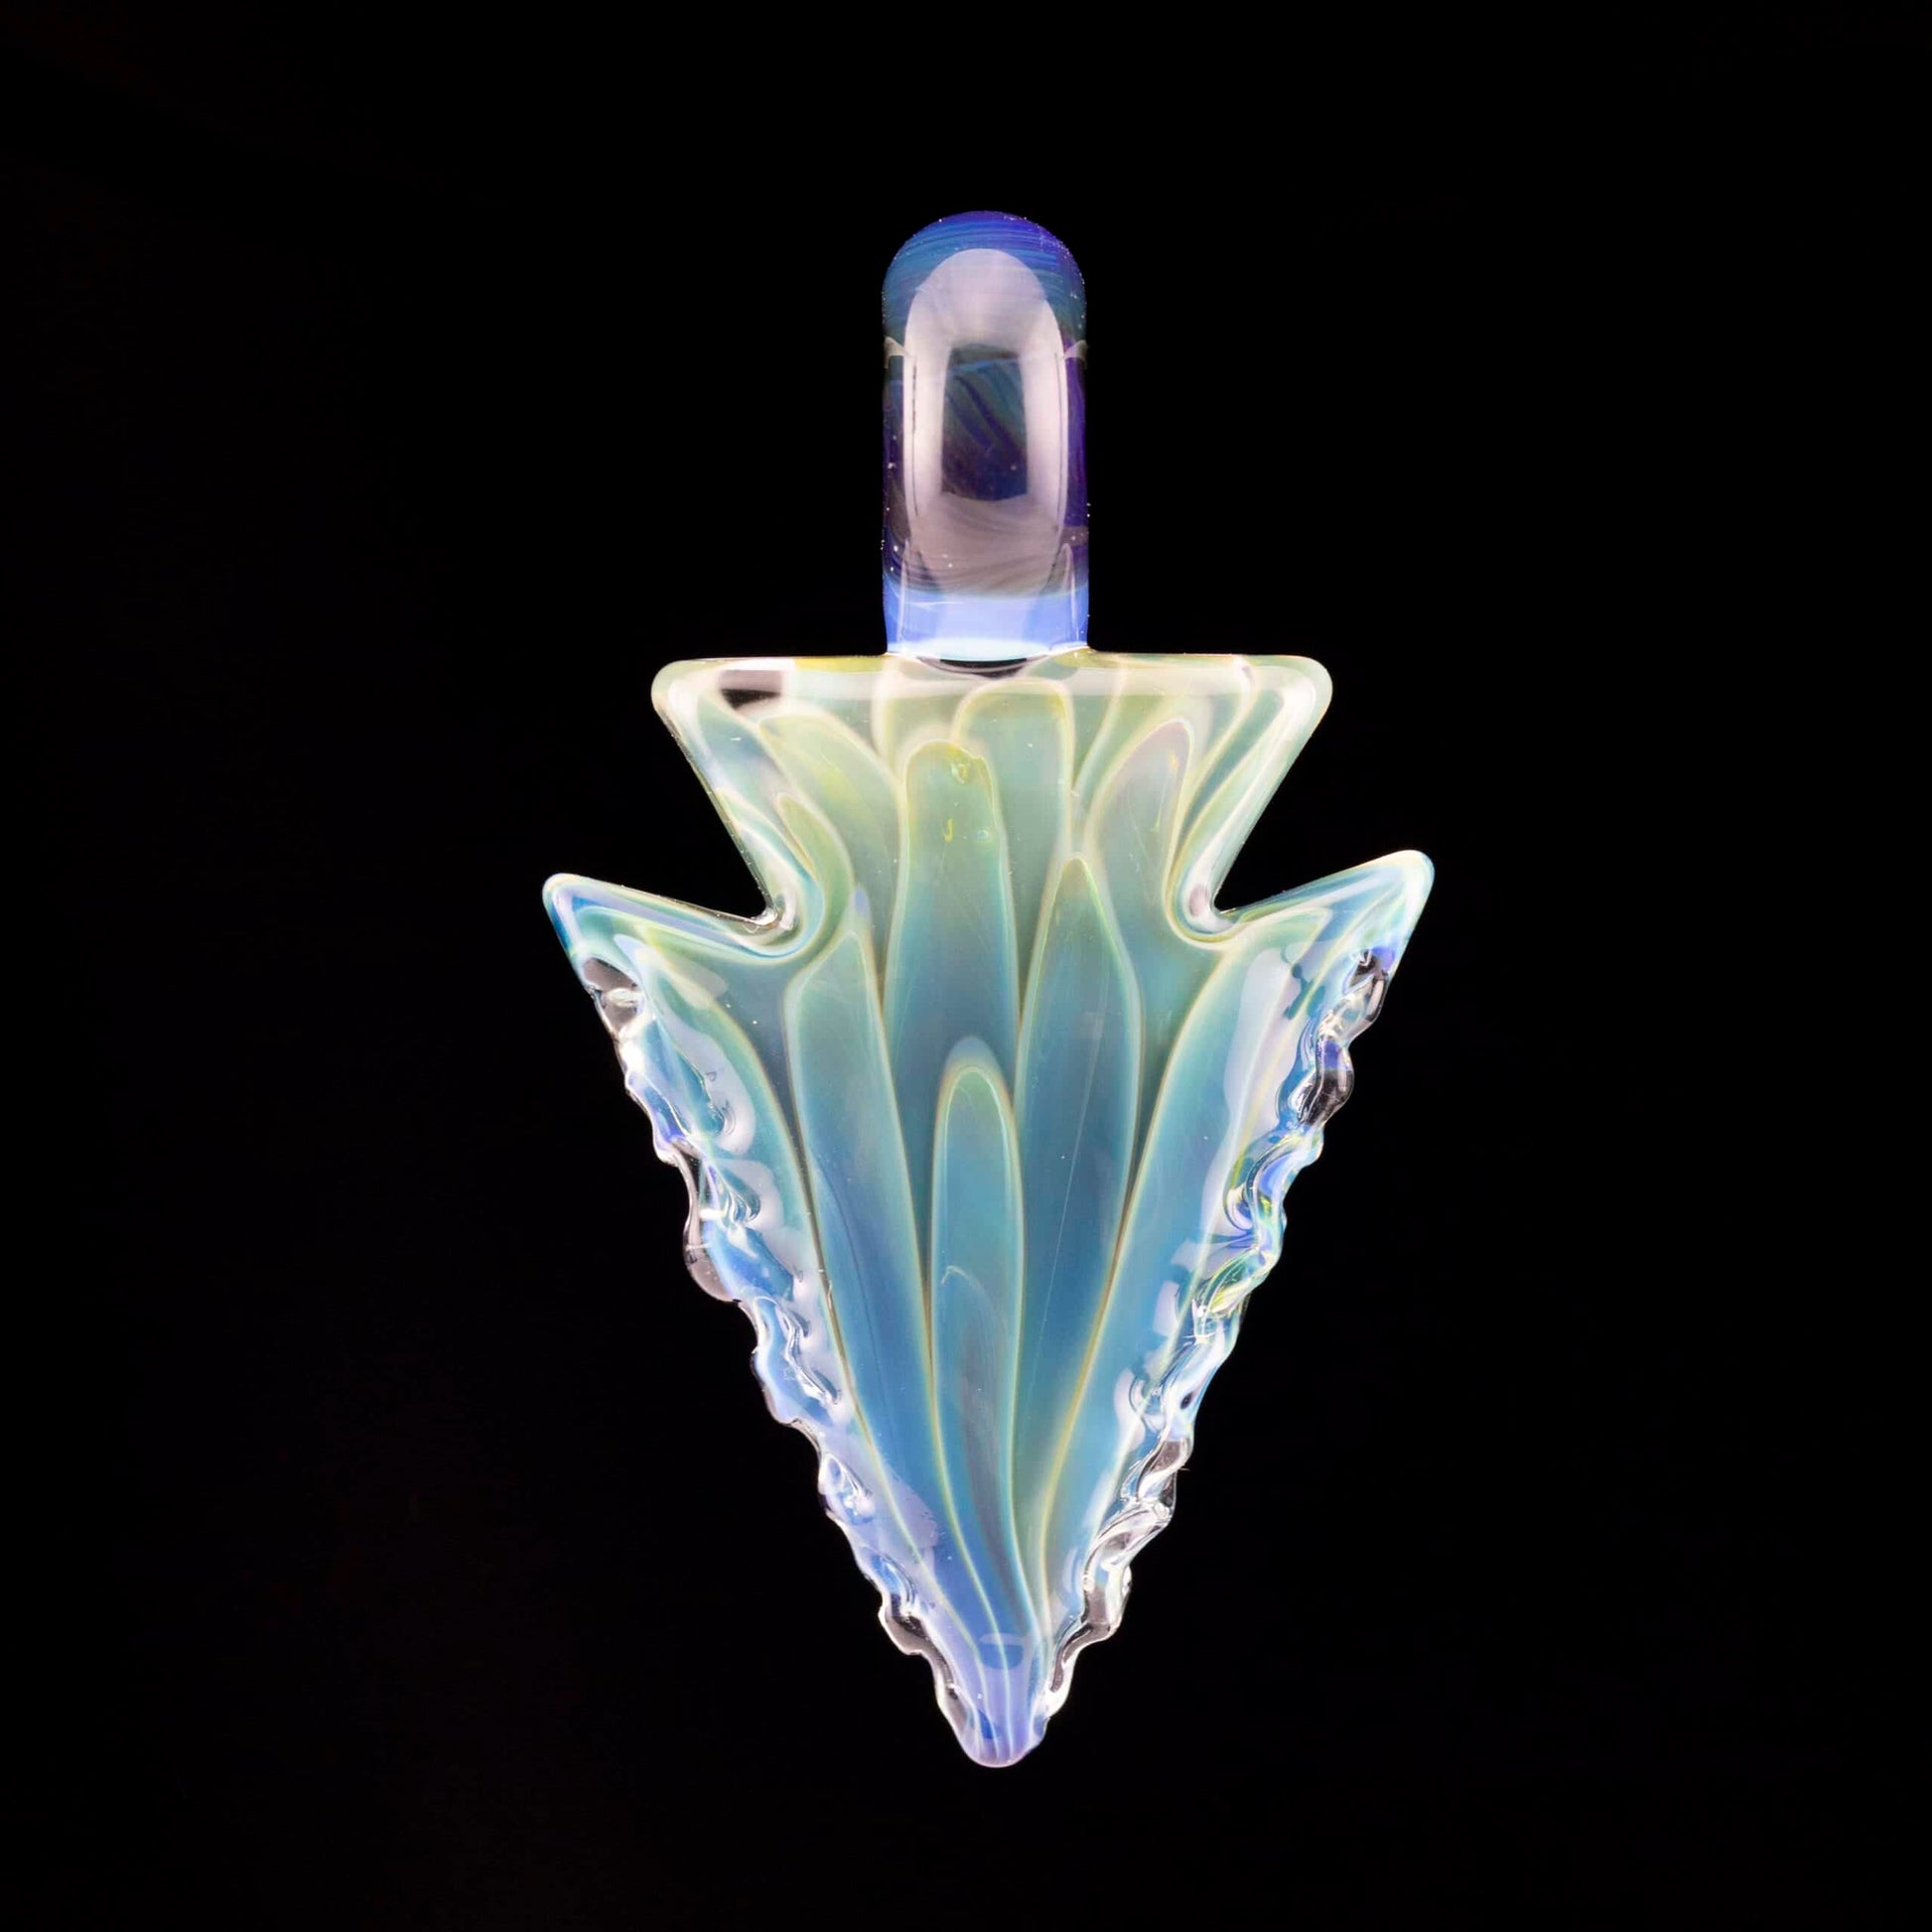 hand-blown glass pendant - Blue Thunder / Silver Fume Implosion Arrowhead Pendant by Elks That Run